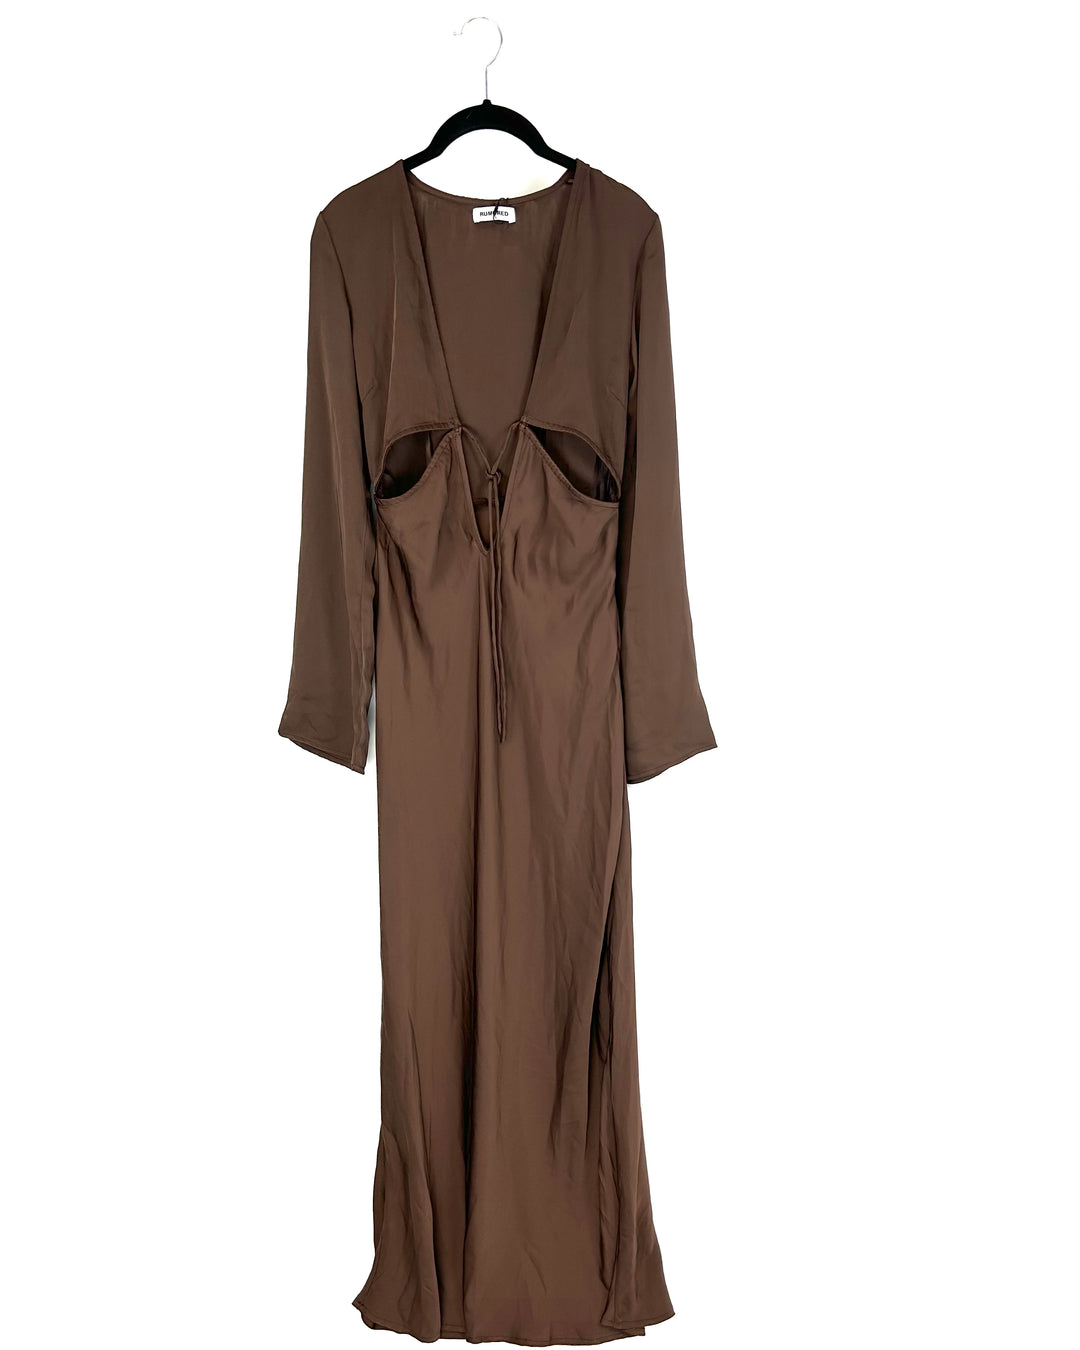 Brown Long Sleeve Maxi Dress - Size 2-4